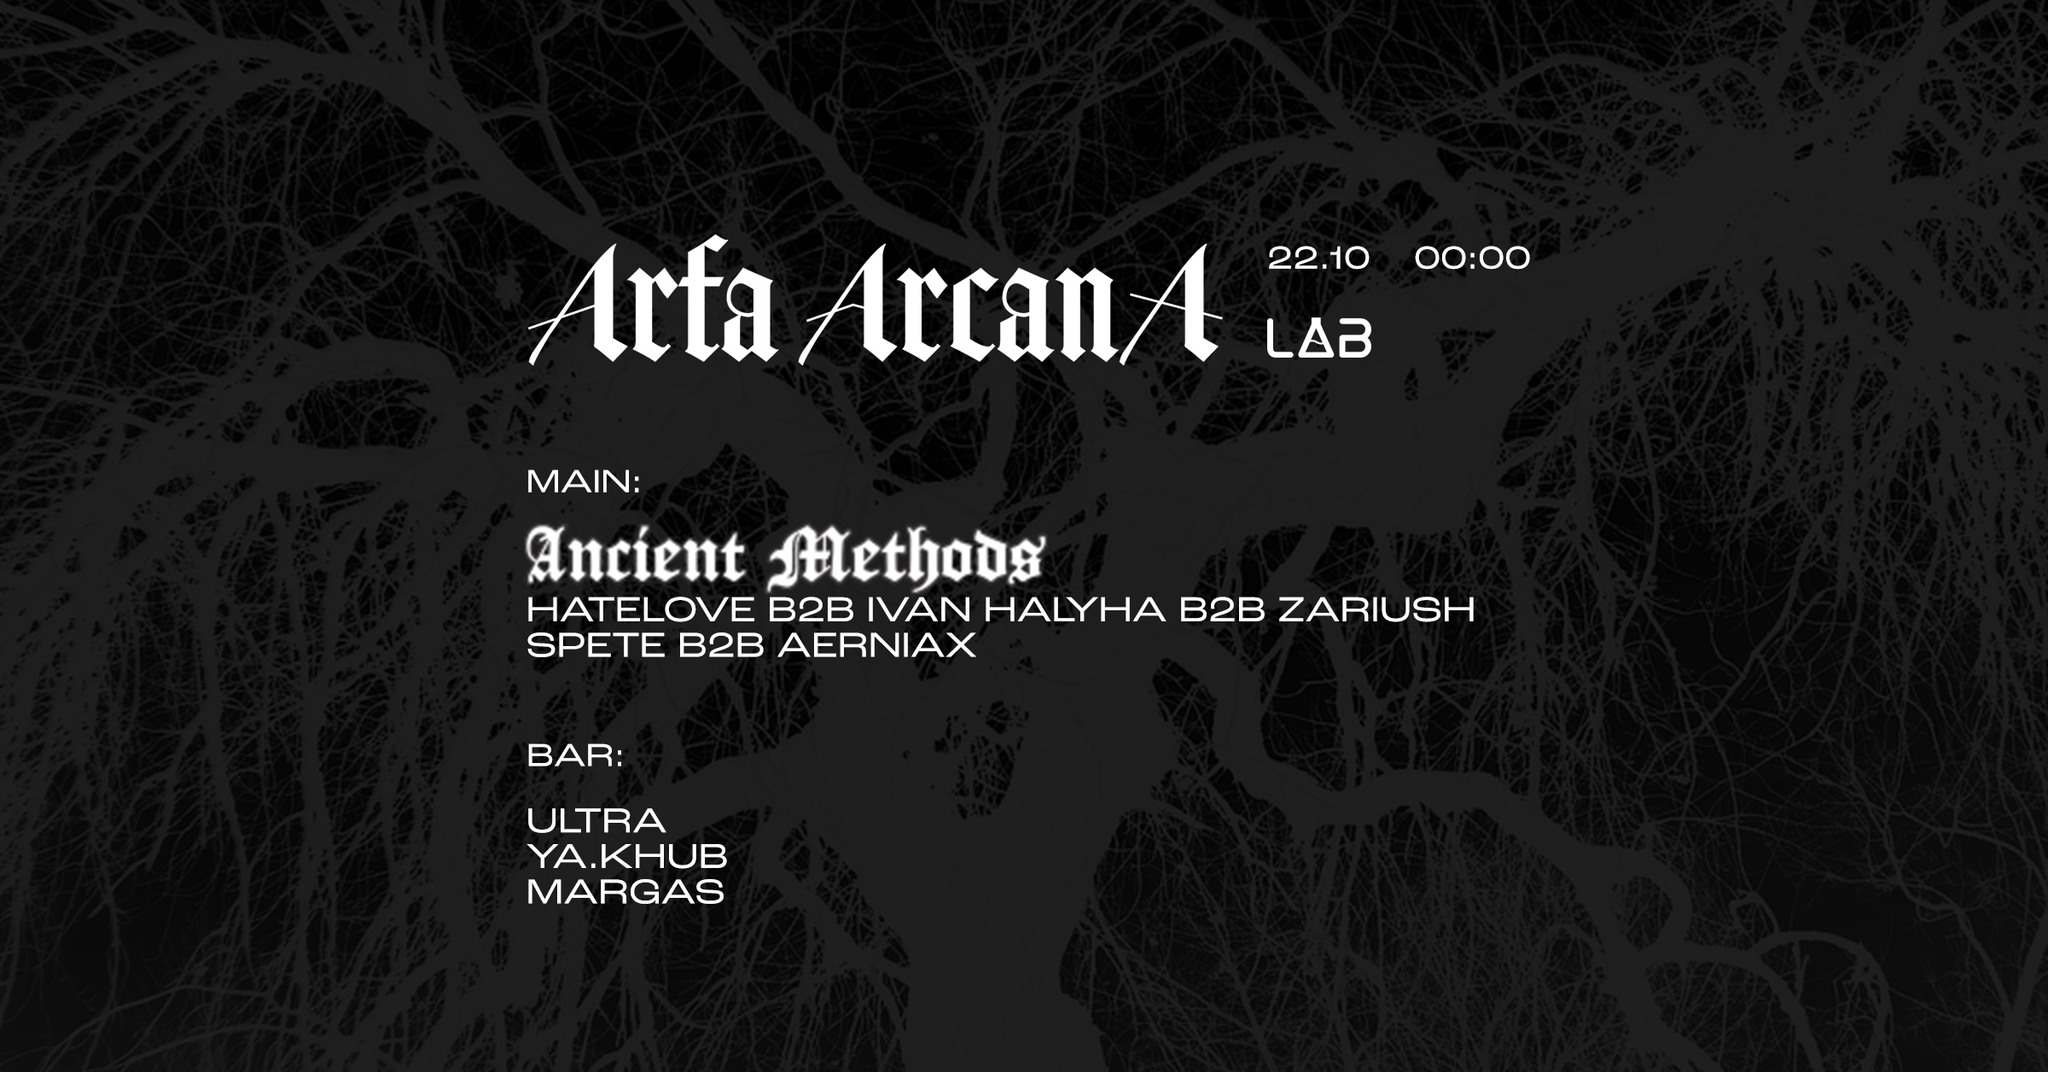 Ancient Methods, Zariush, Arfa Arcana, Projekt LAB